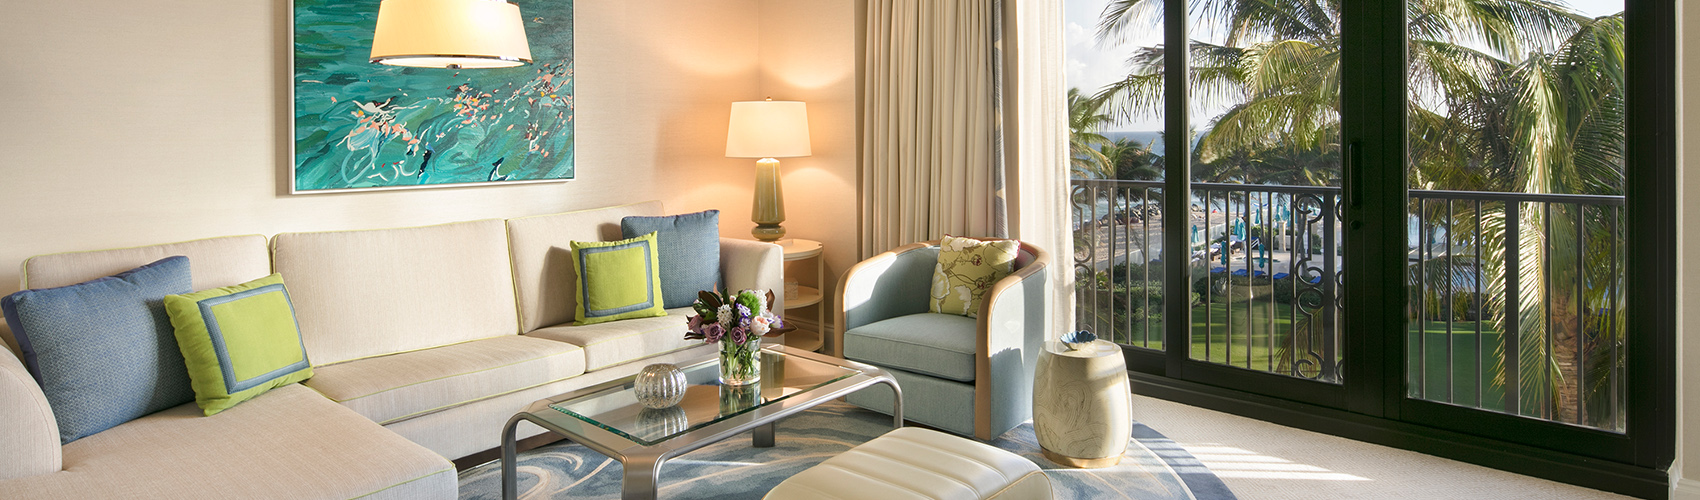 Premium Suite with Partial Ocean View Living Room